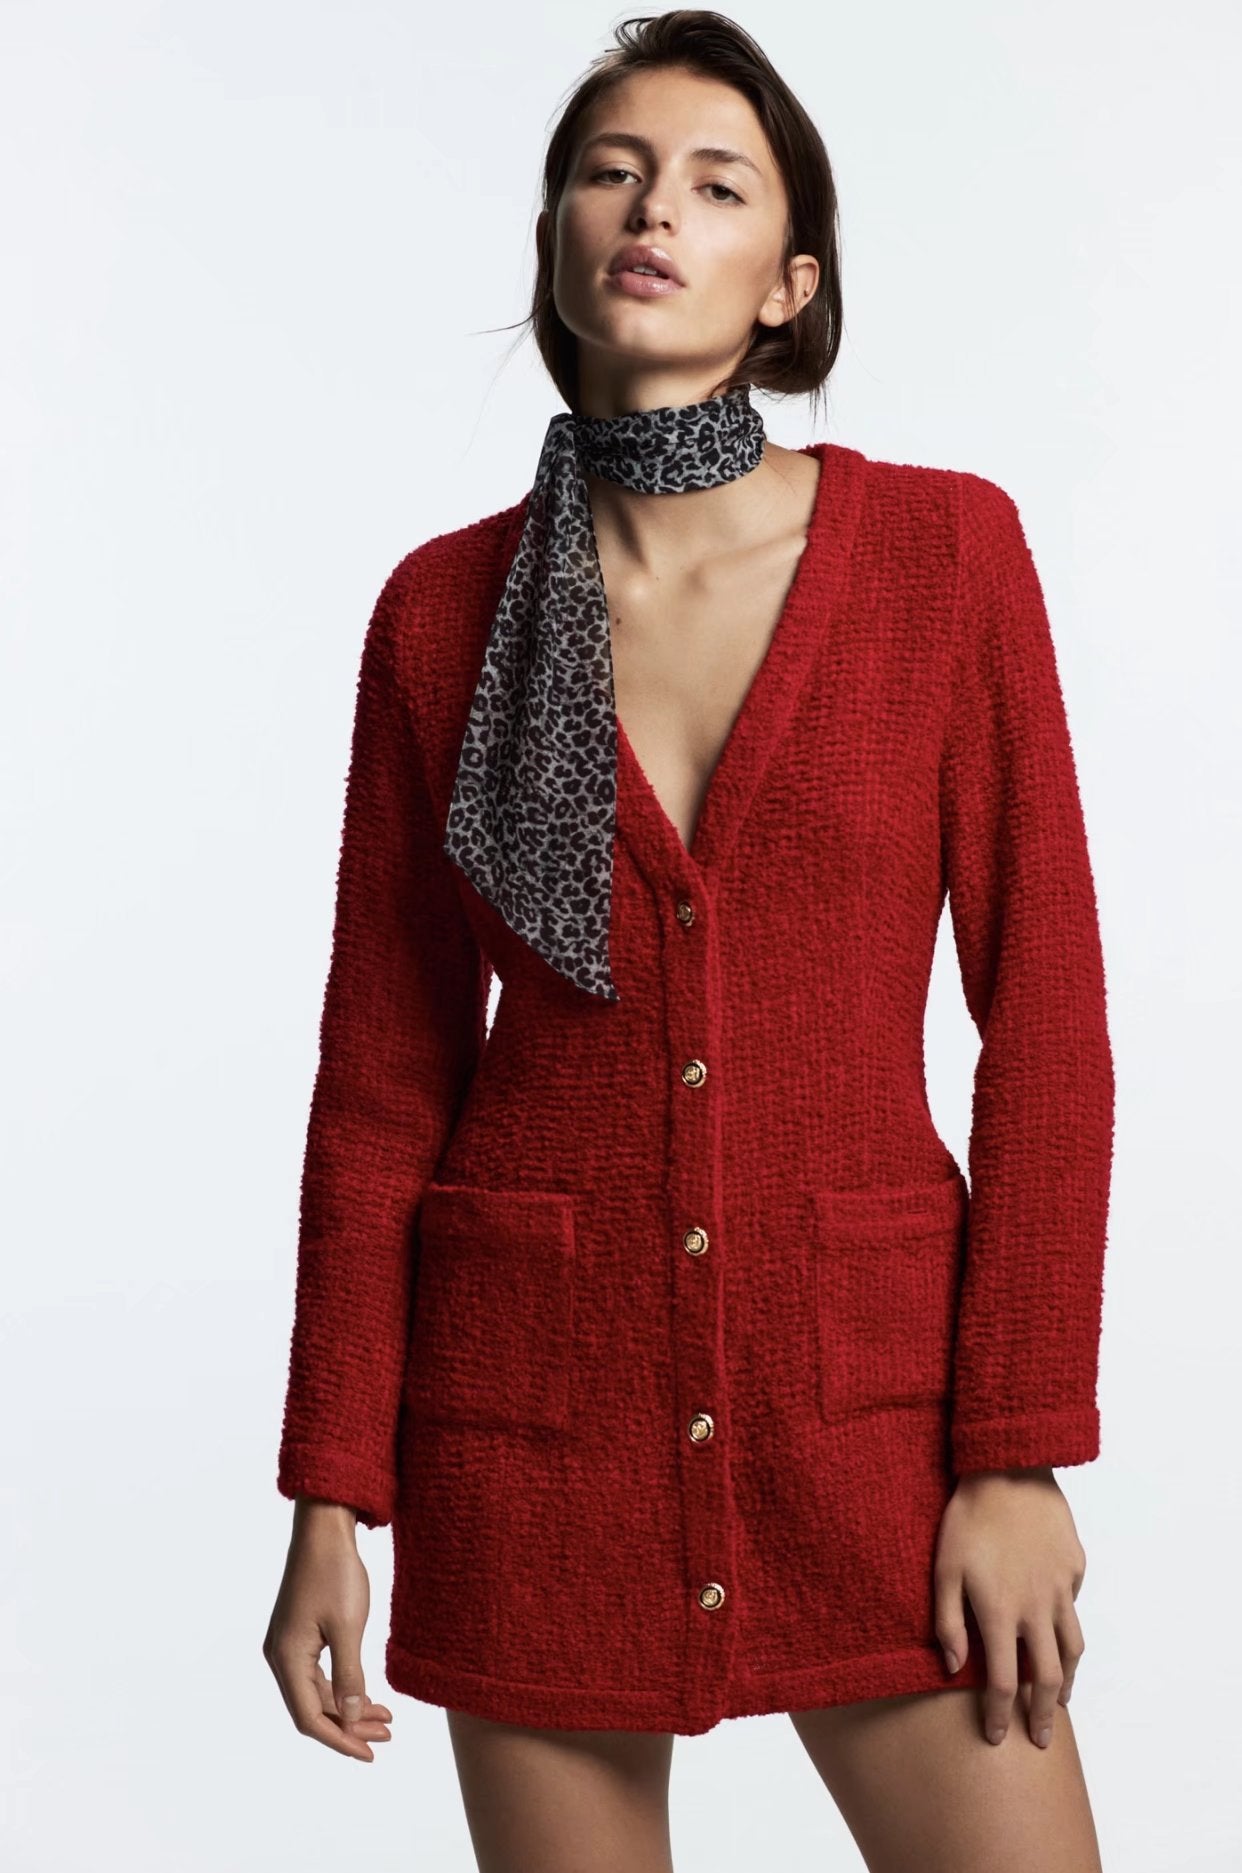 OOTDGIRL Women Fashion Two Pocket Red Blazer Coat Loose Jacket Vintage Long Sleeve Female Outerwear Chic Winter Tops